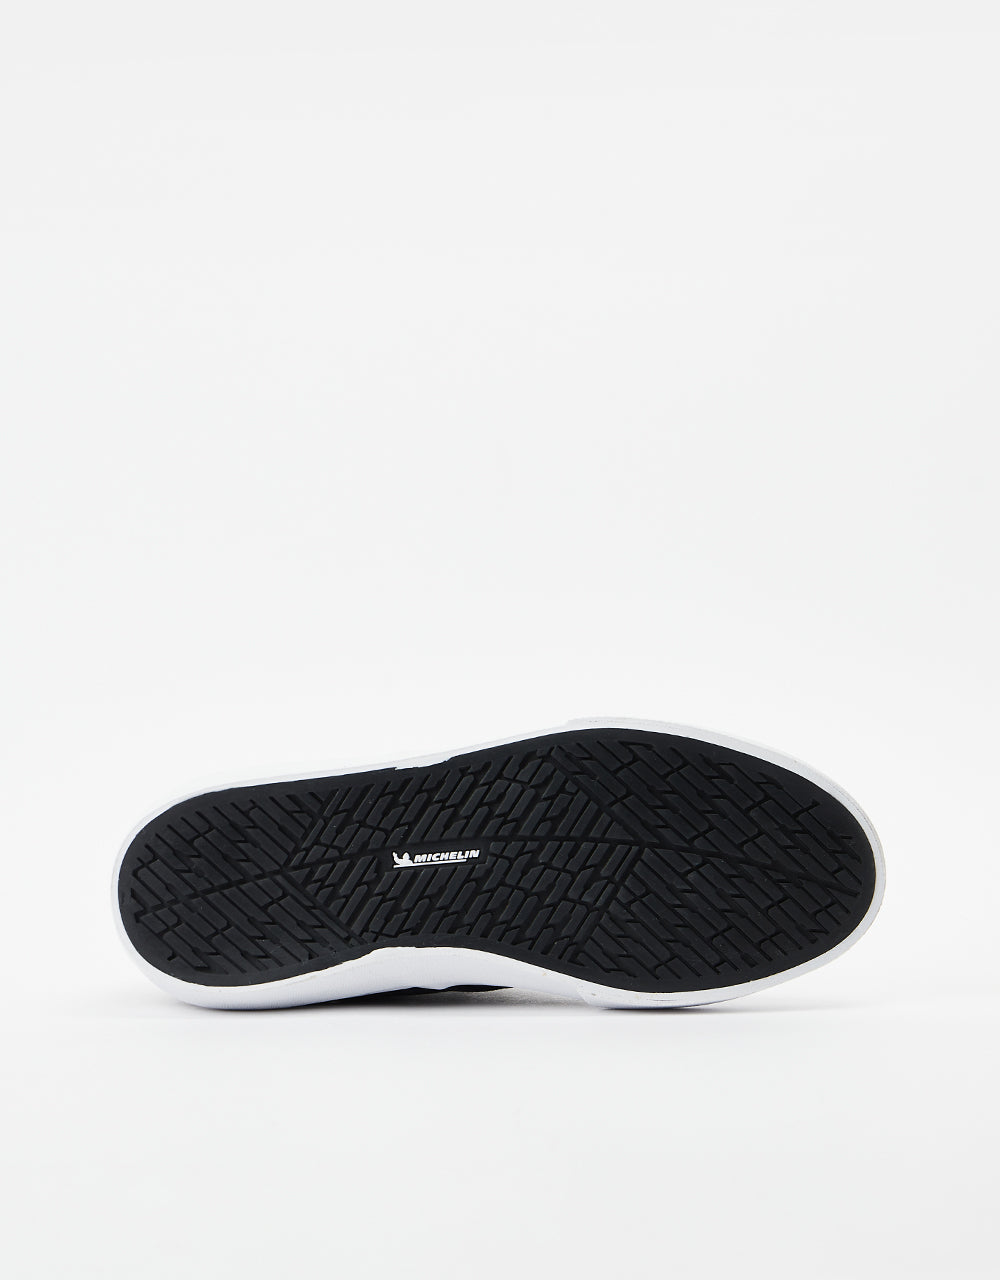 Etnies x Michelin Singleton Vulc XLT Skate Shoes - Navy/Brown/White